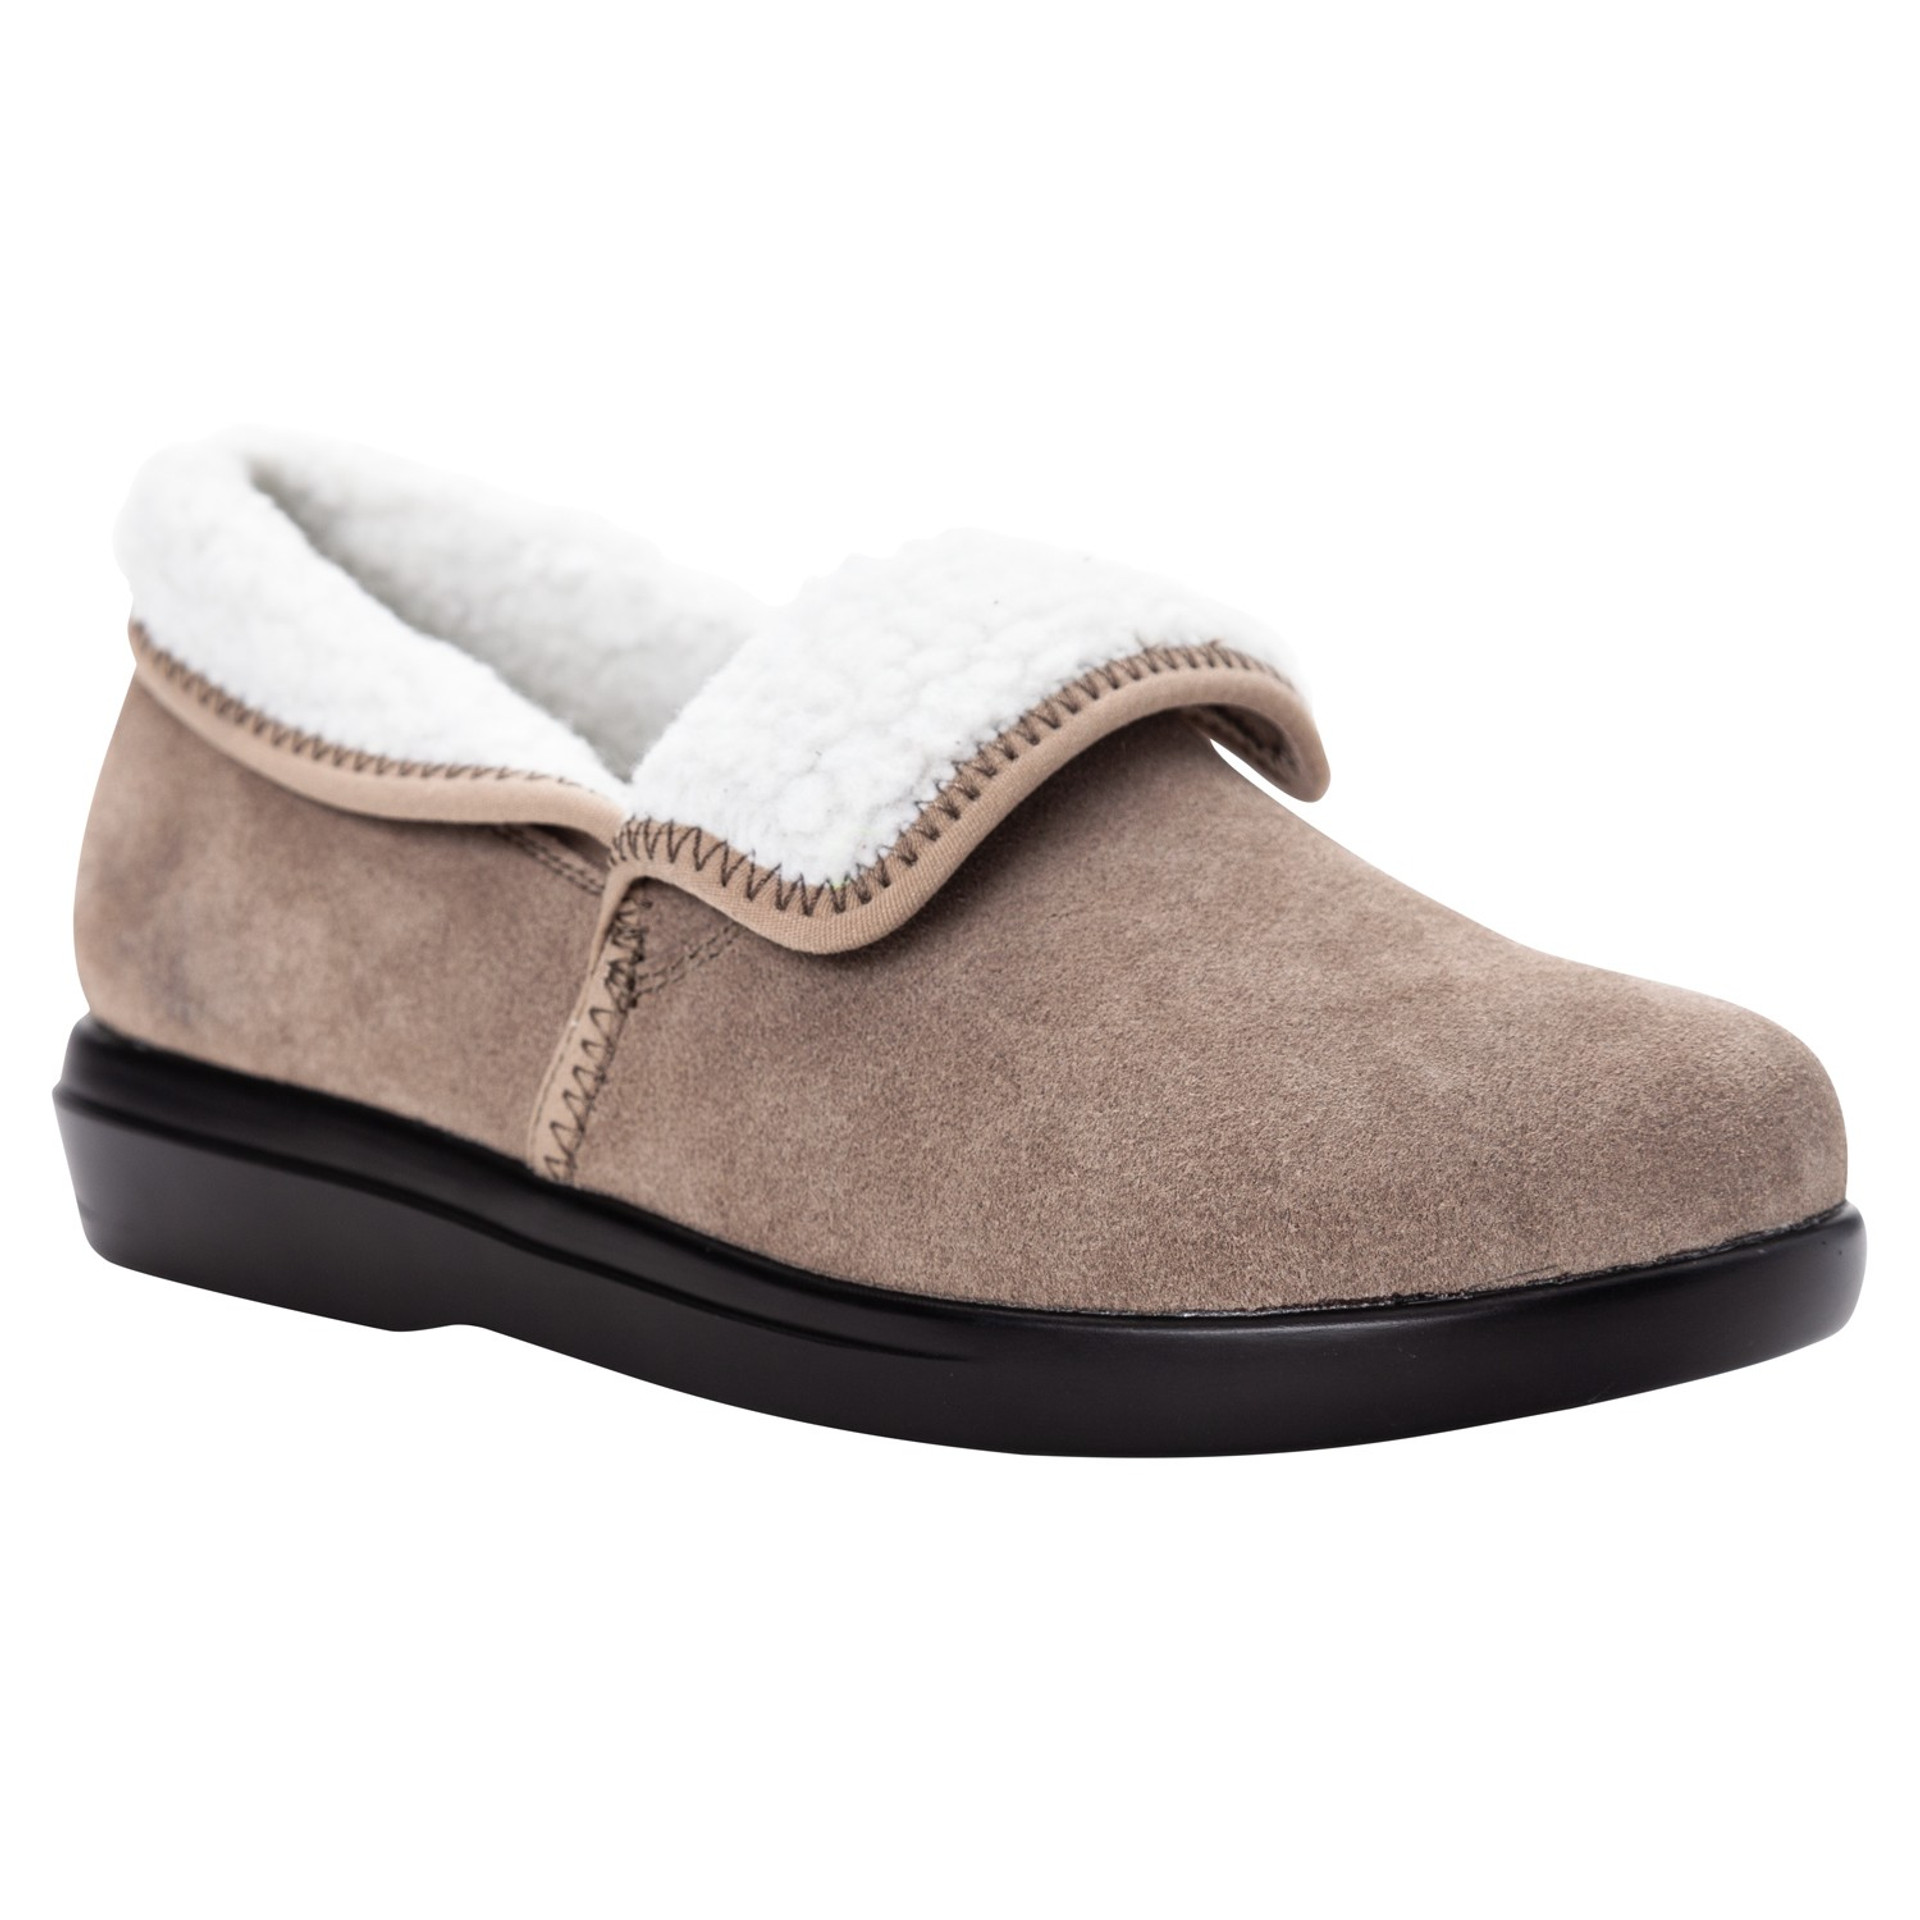 Propet Boots, Walking Shoes & Sandals for Men & Women | Orthotic Shop